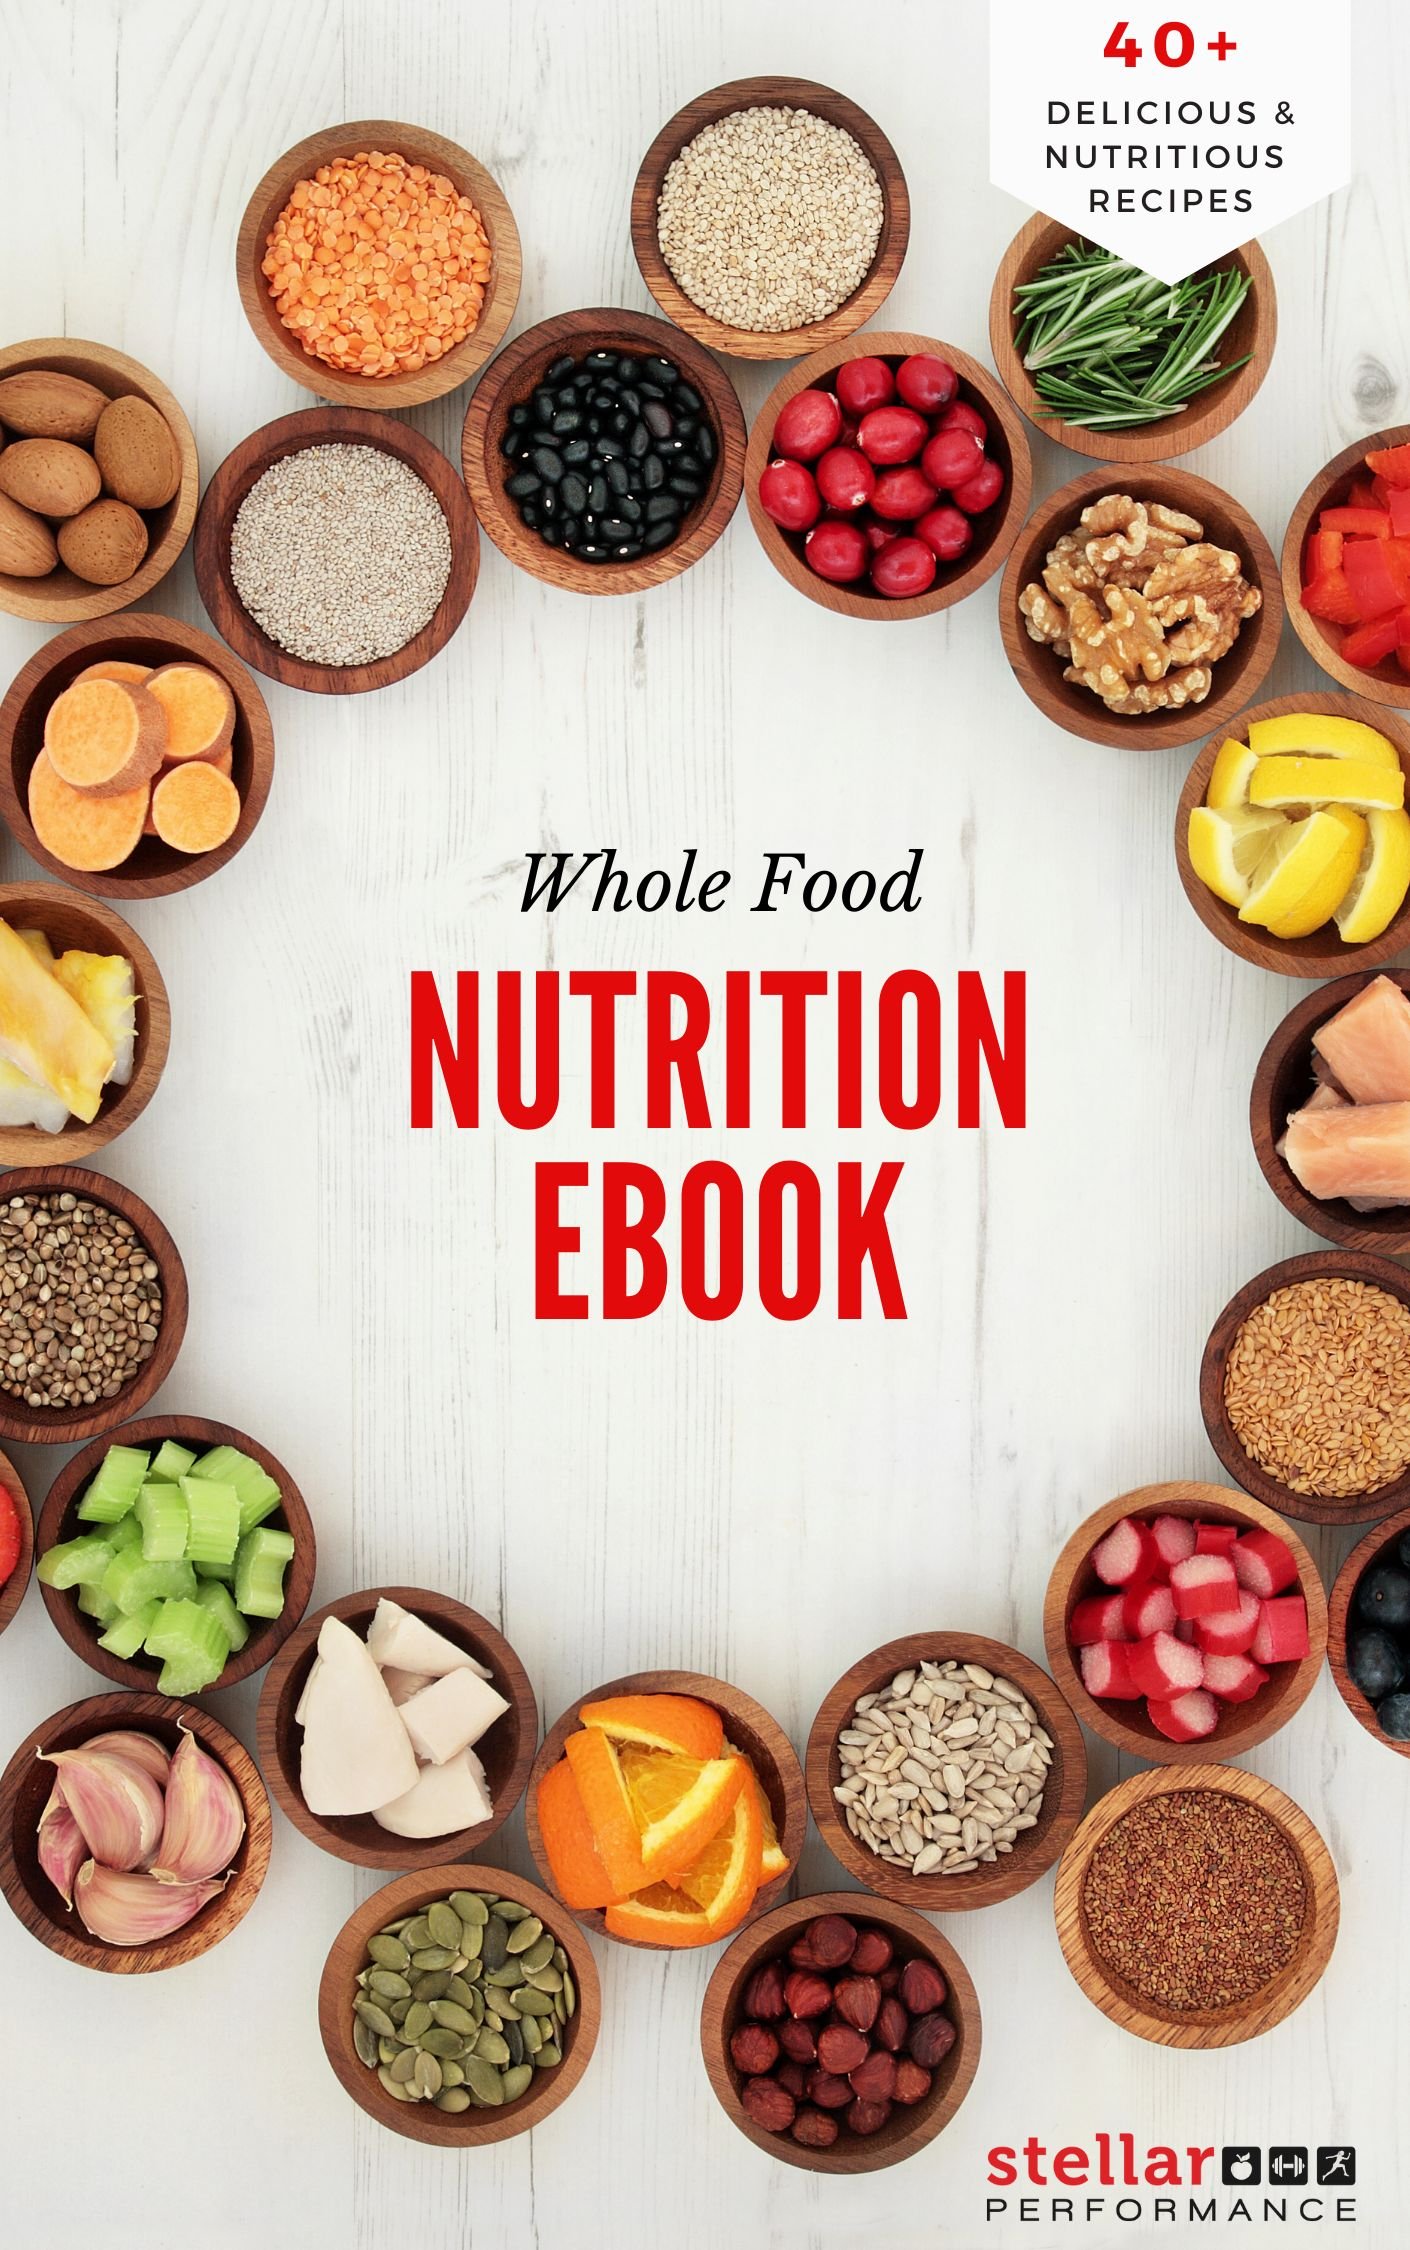 Copy of 2020 Nutrition Guide.jpg